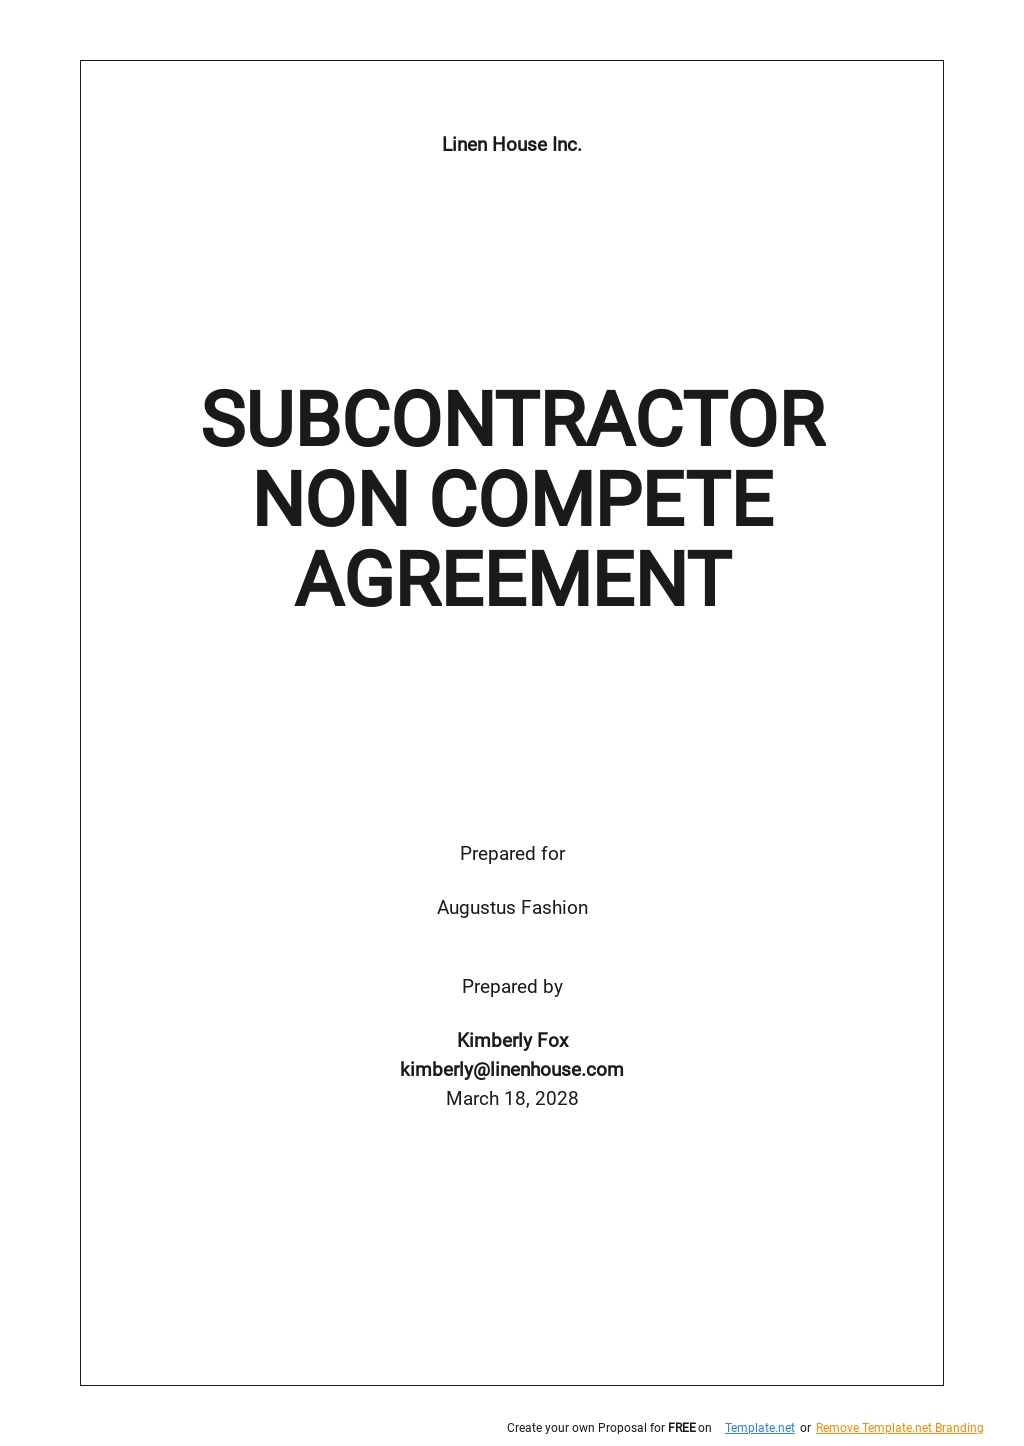 Subcontractor Non Compete Agreement Template.jpe